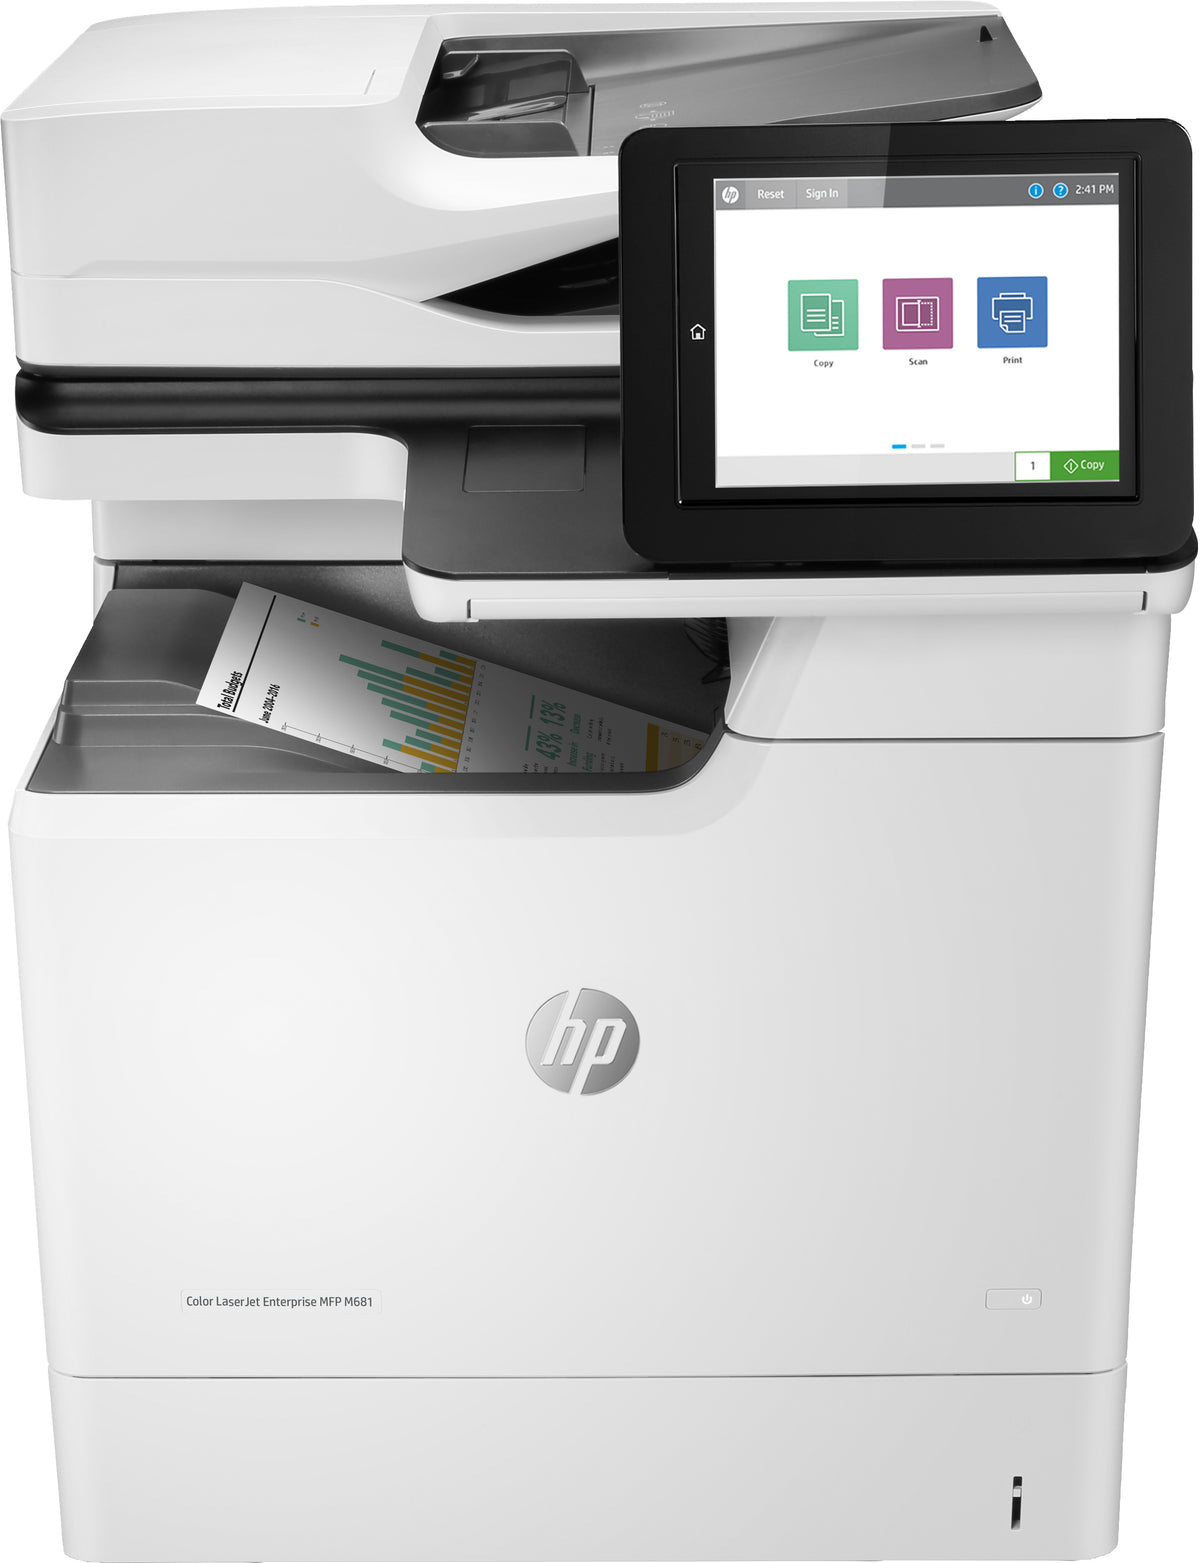 HP Color LaserJet Enterprise MFP M681dh - Impresora multifunción - color - láser - 216 x 863 mm (original) - A4/Legal (soportes) - hasta 47 ppm (copia) - hasta 47 ppm (impresión) - 650 hojas - USB 2.0 , Gigabit LAN, host USB 2.0